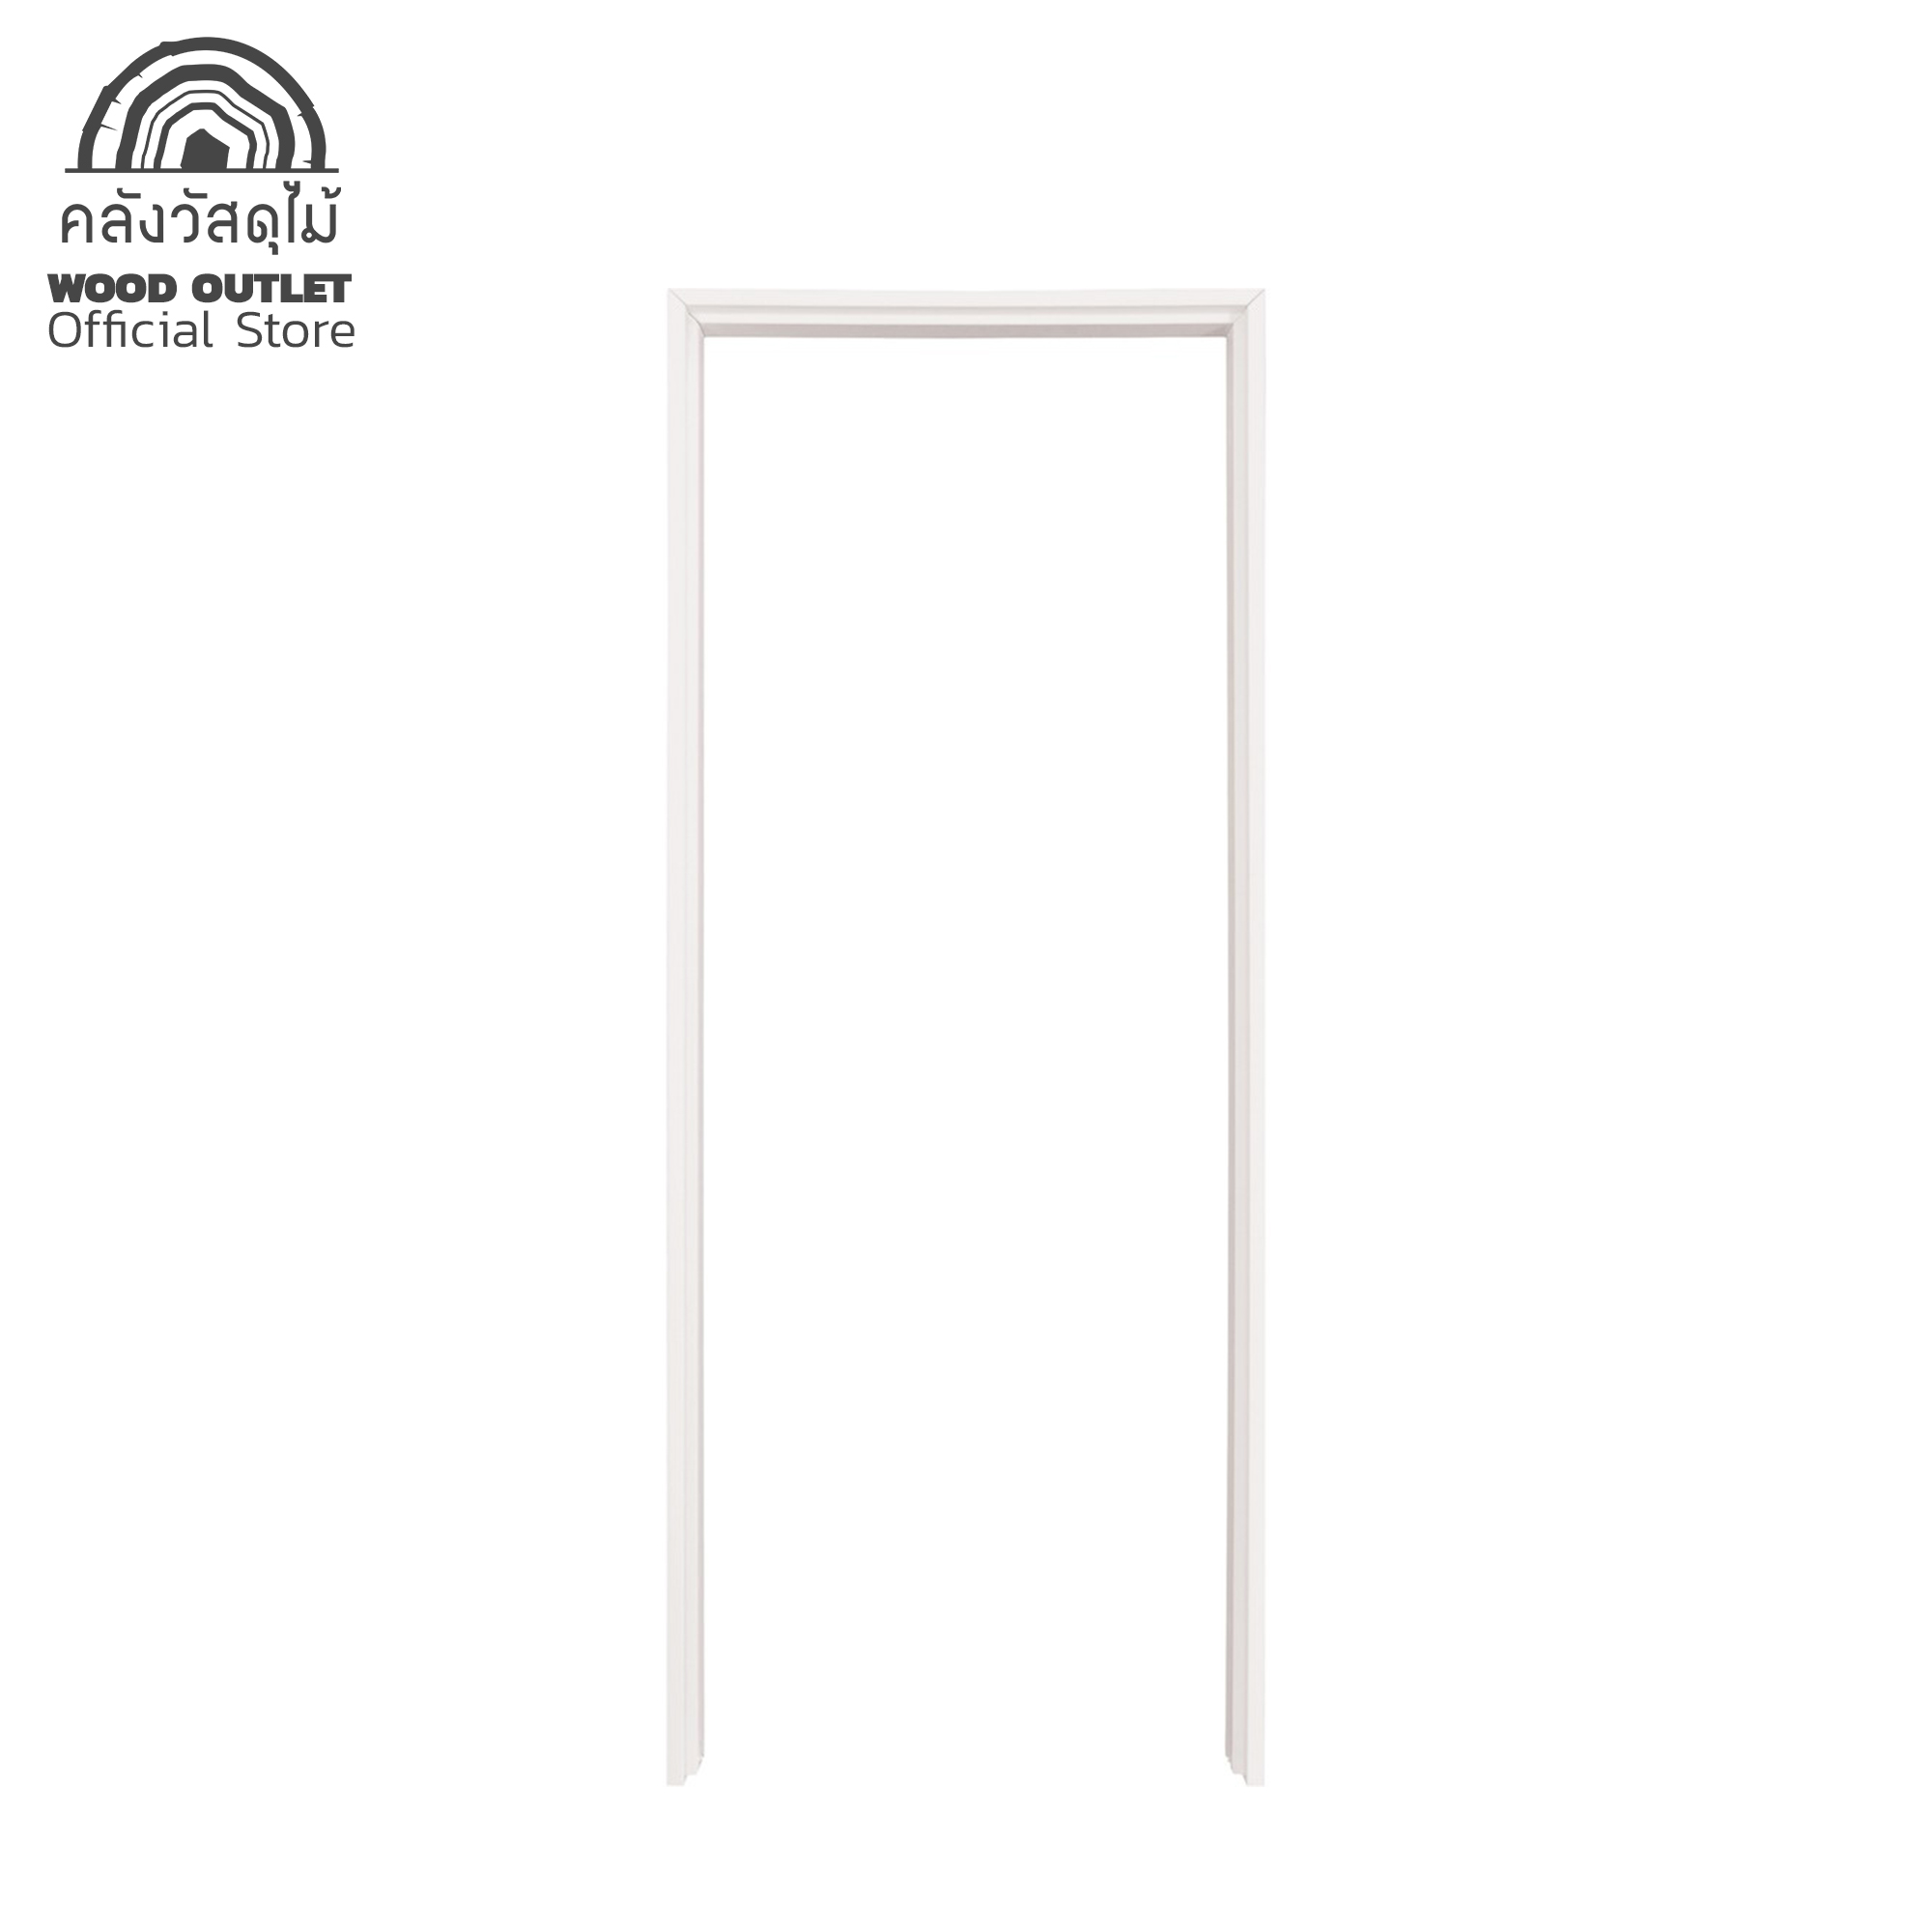 WOOD OUTLET คลังวัสดุไม้ วงกบประตู PVC สีขาว 70x180 cm. ประตูห้องน้ำ ประตูPVC